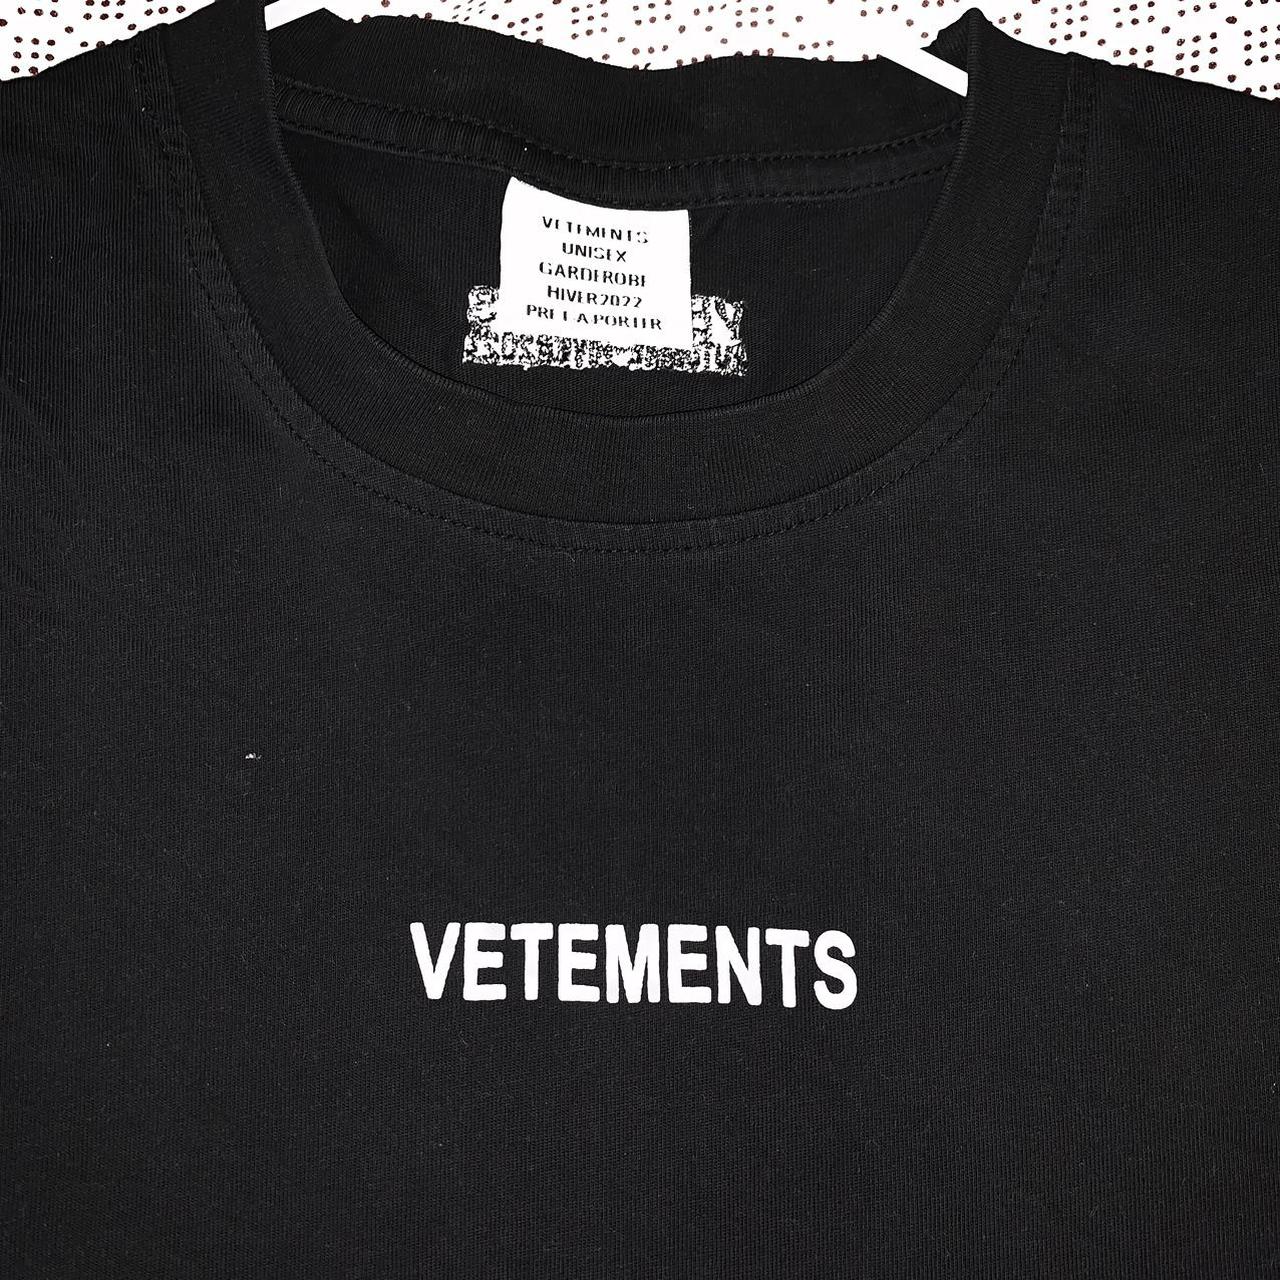 Vetements Men's Black and White T-shirt | Depop